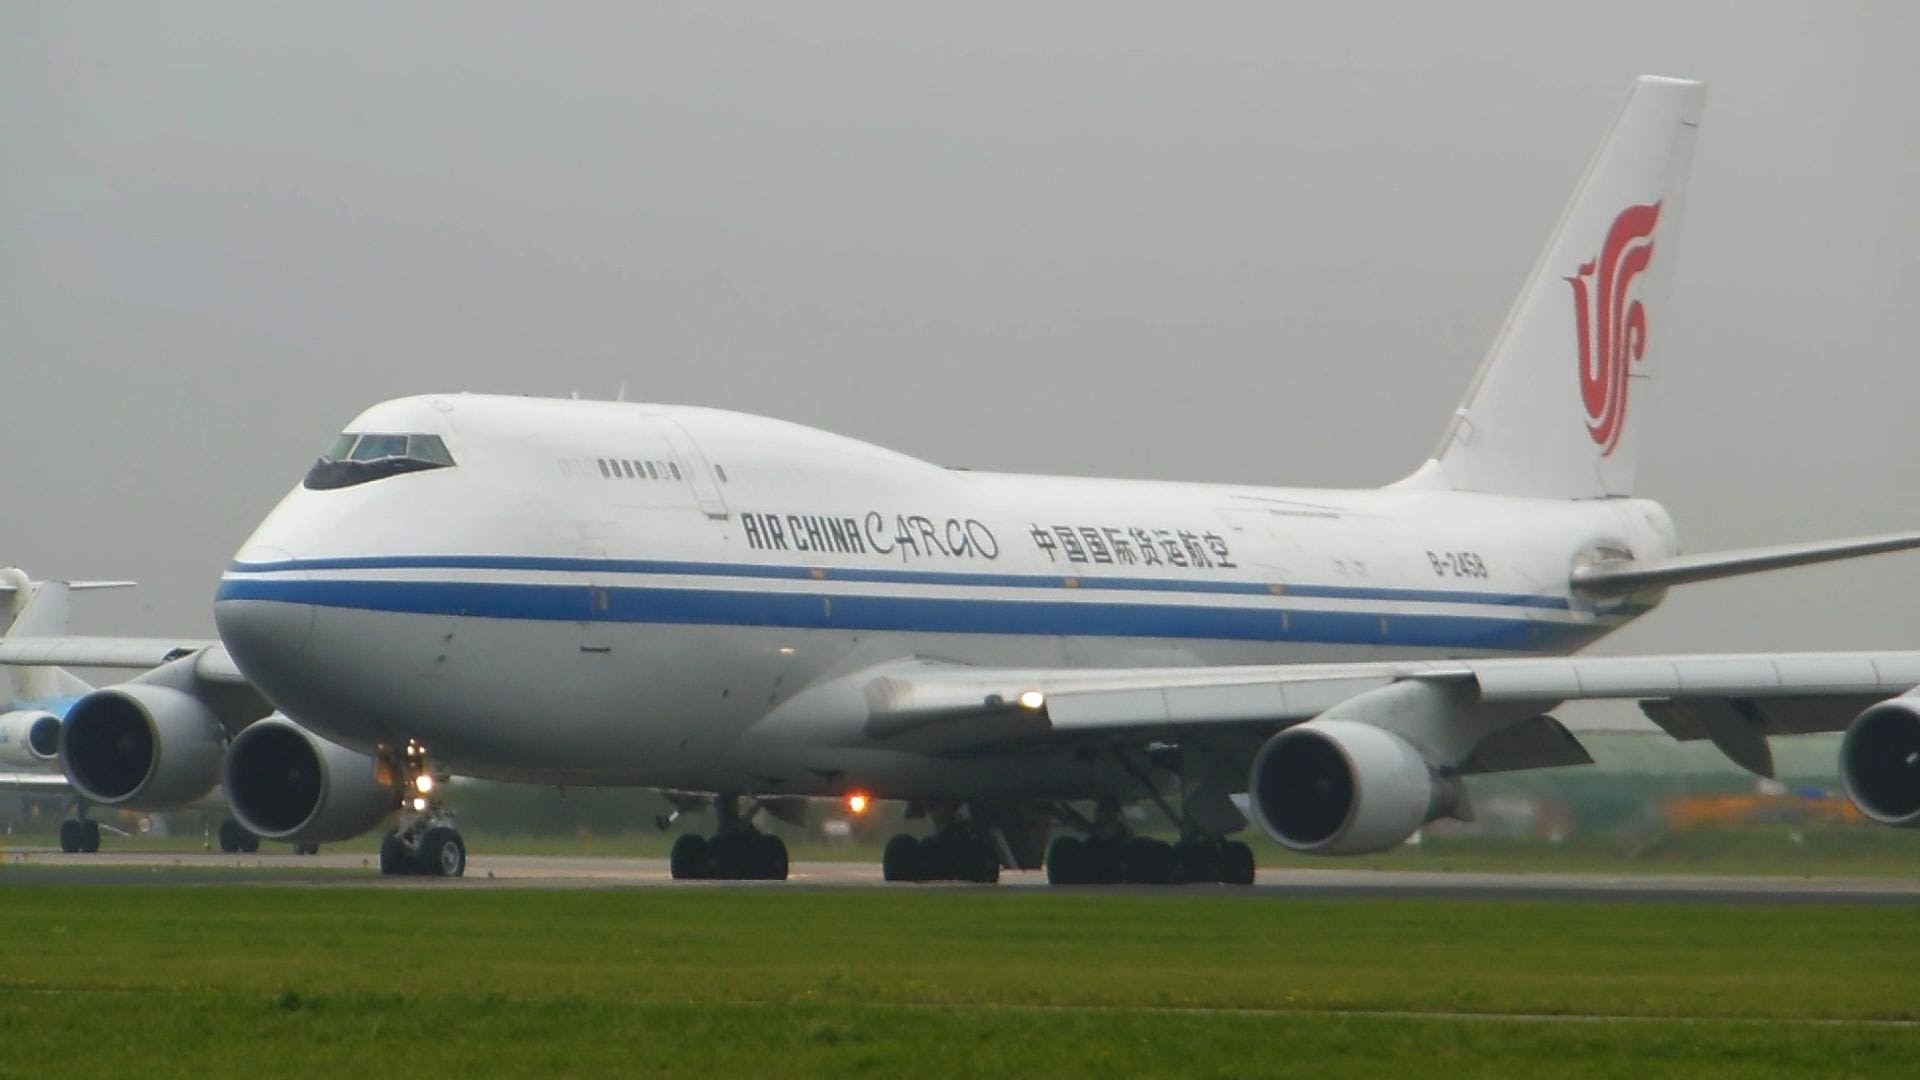 Air China Cargo.jpg